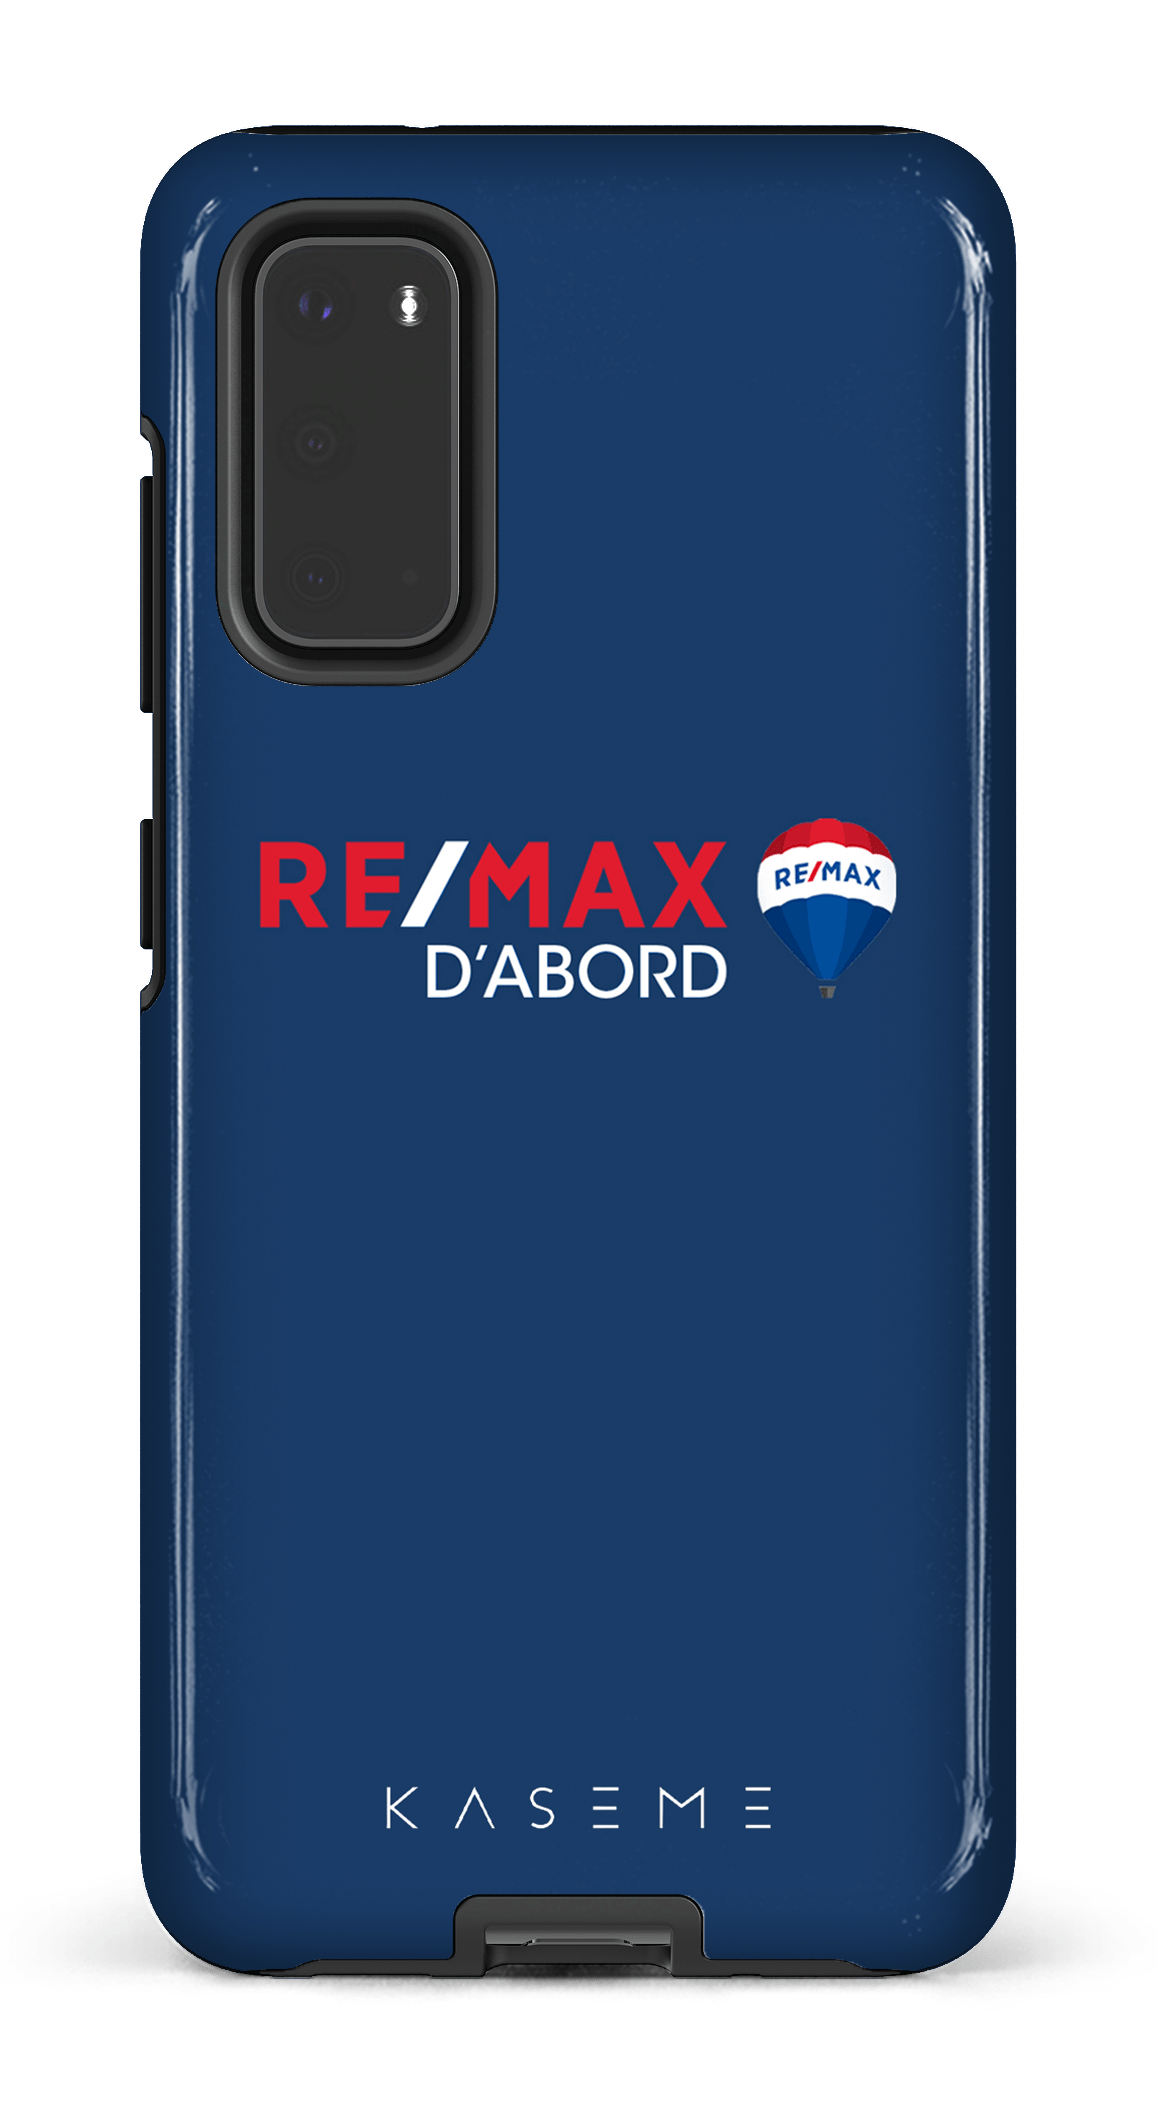 Remax D'abord Bleu - Galaxy S20